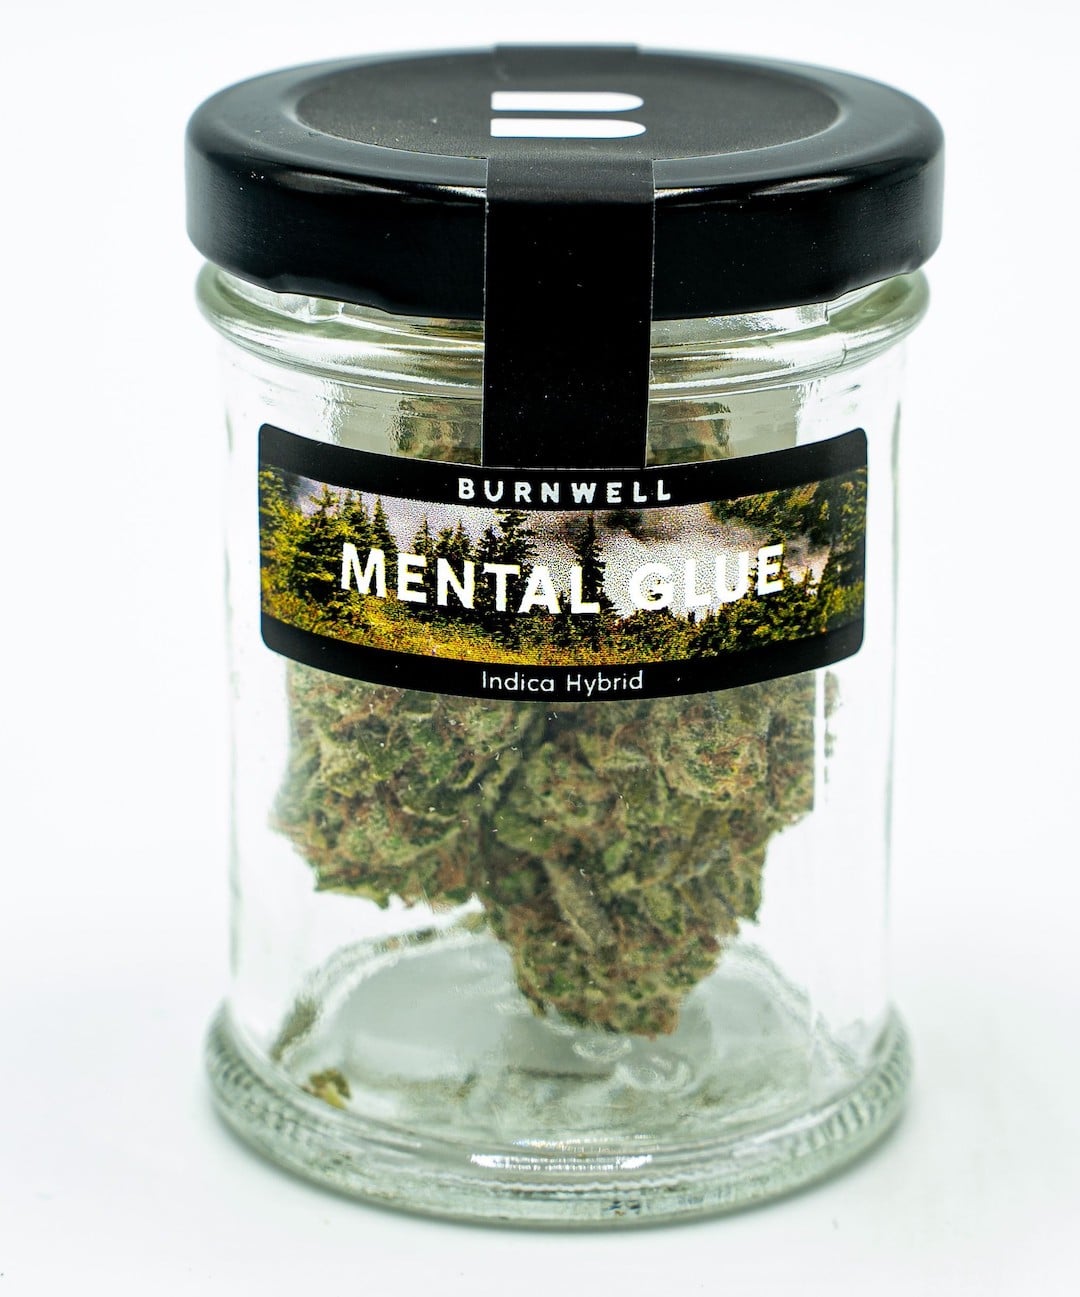 Mental Glue Cannabis Strain from Burnwell